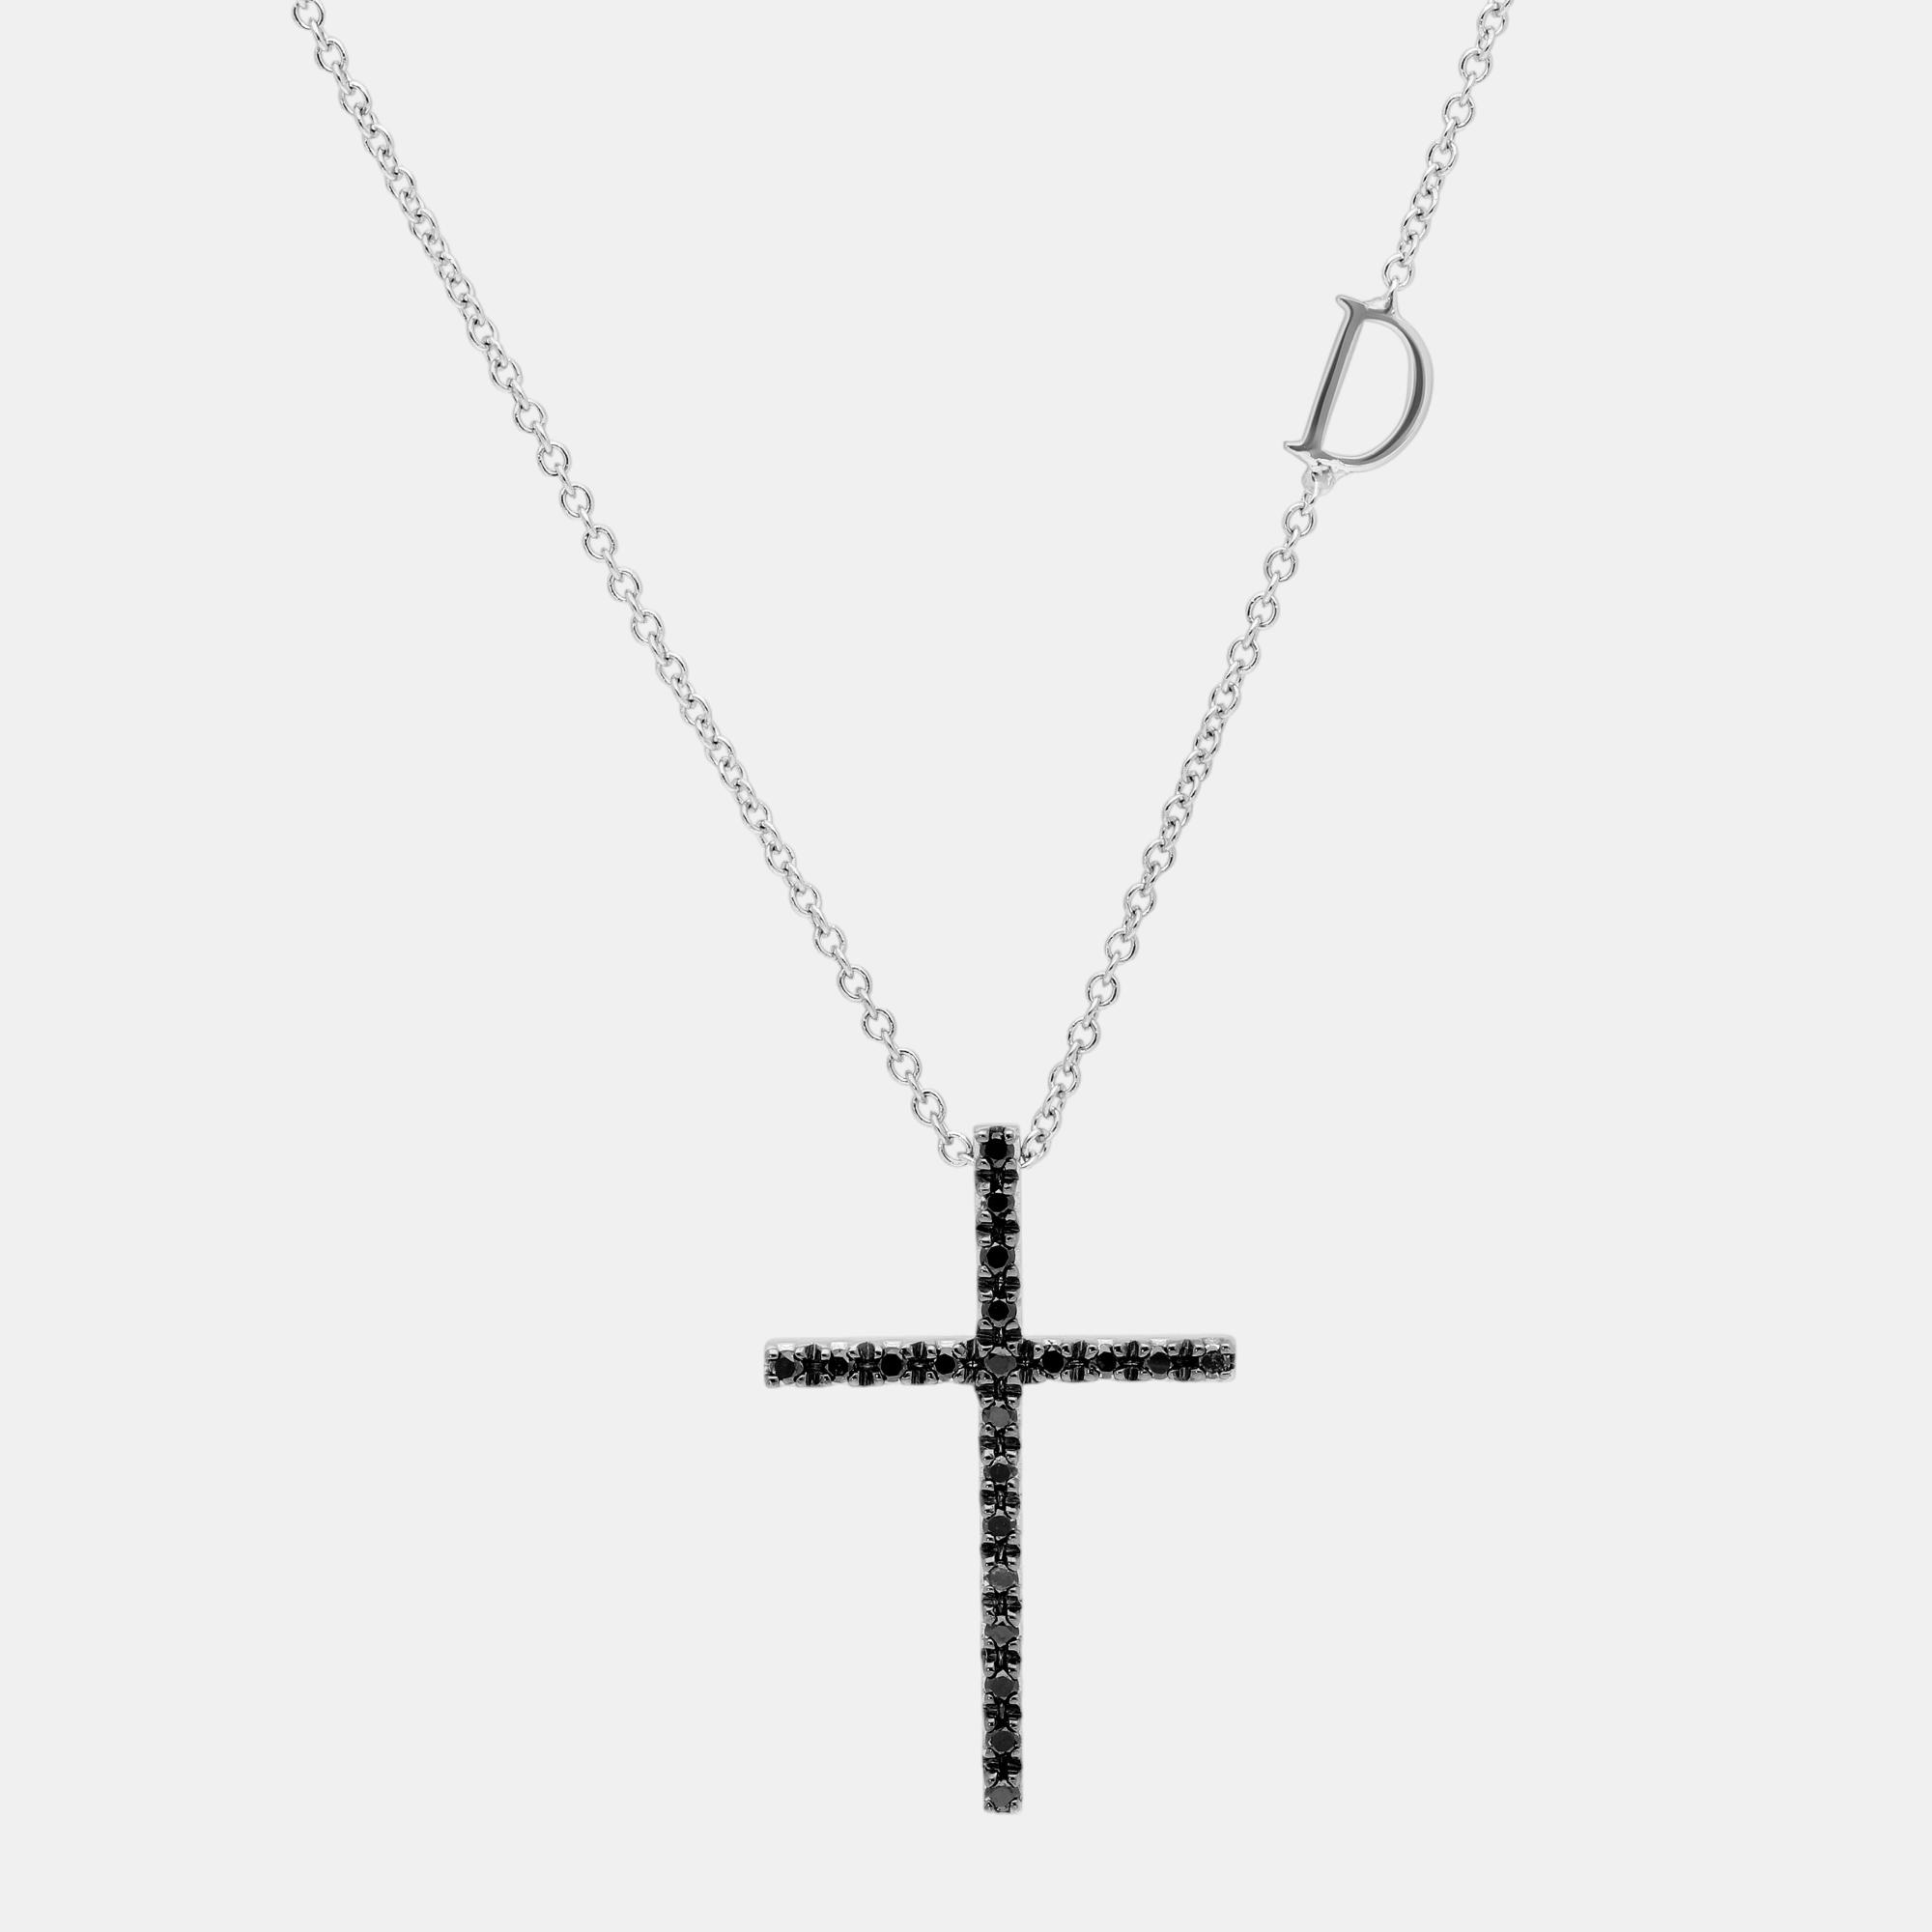 Damiani 18k white gold, black diamond cross pendant necklace